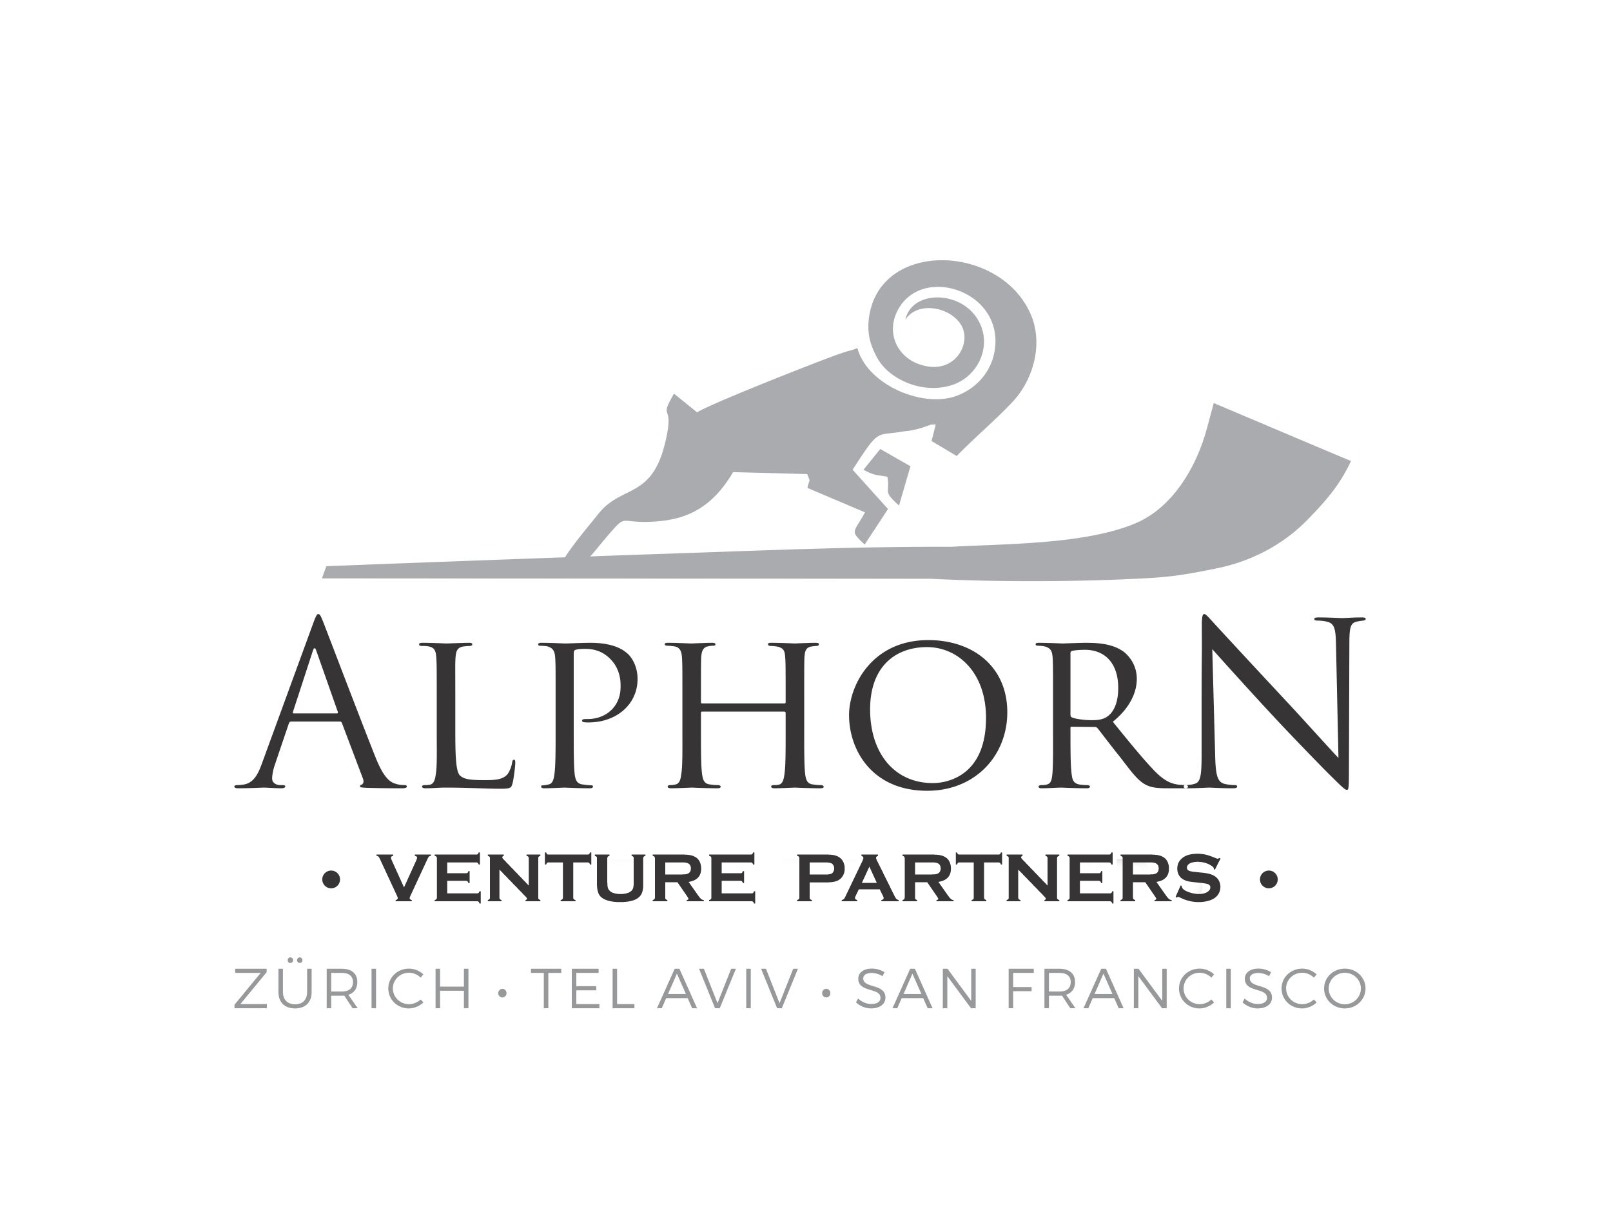 Alphorn Venture partners logo